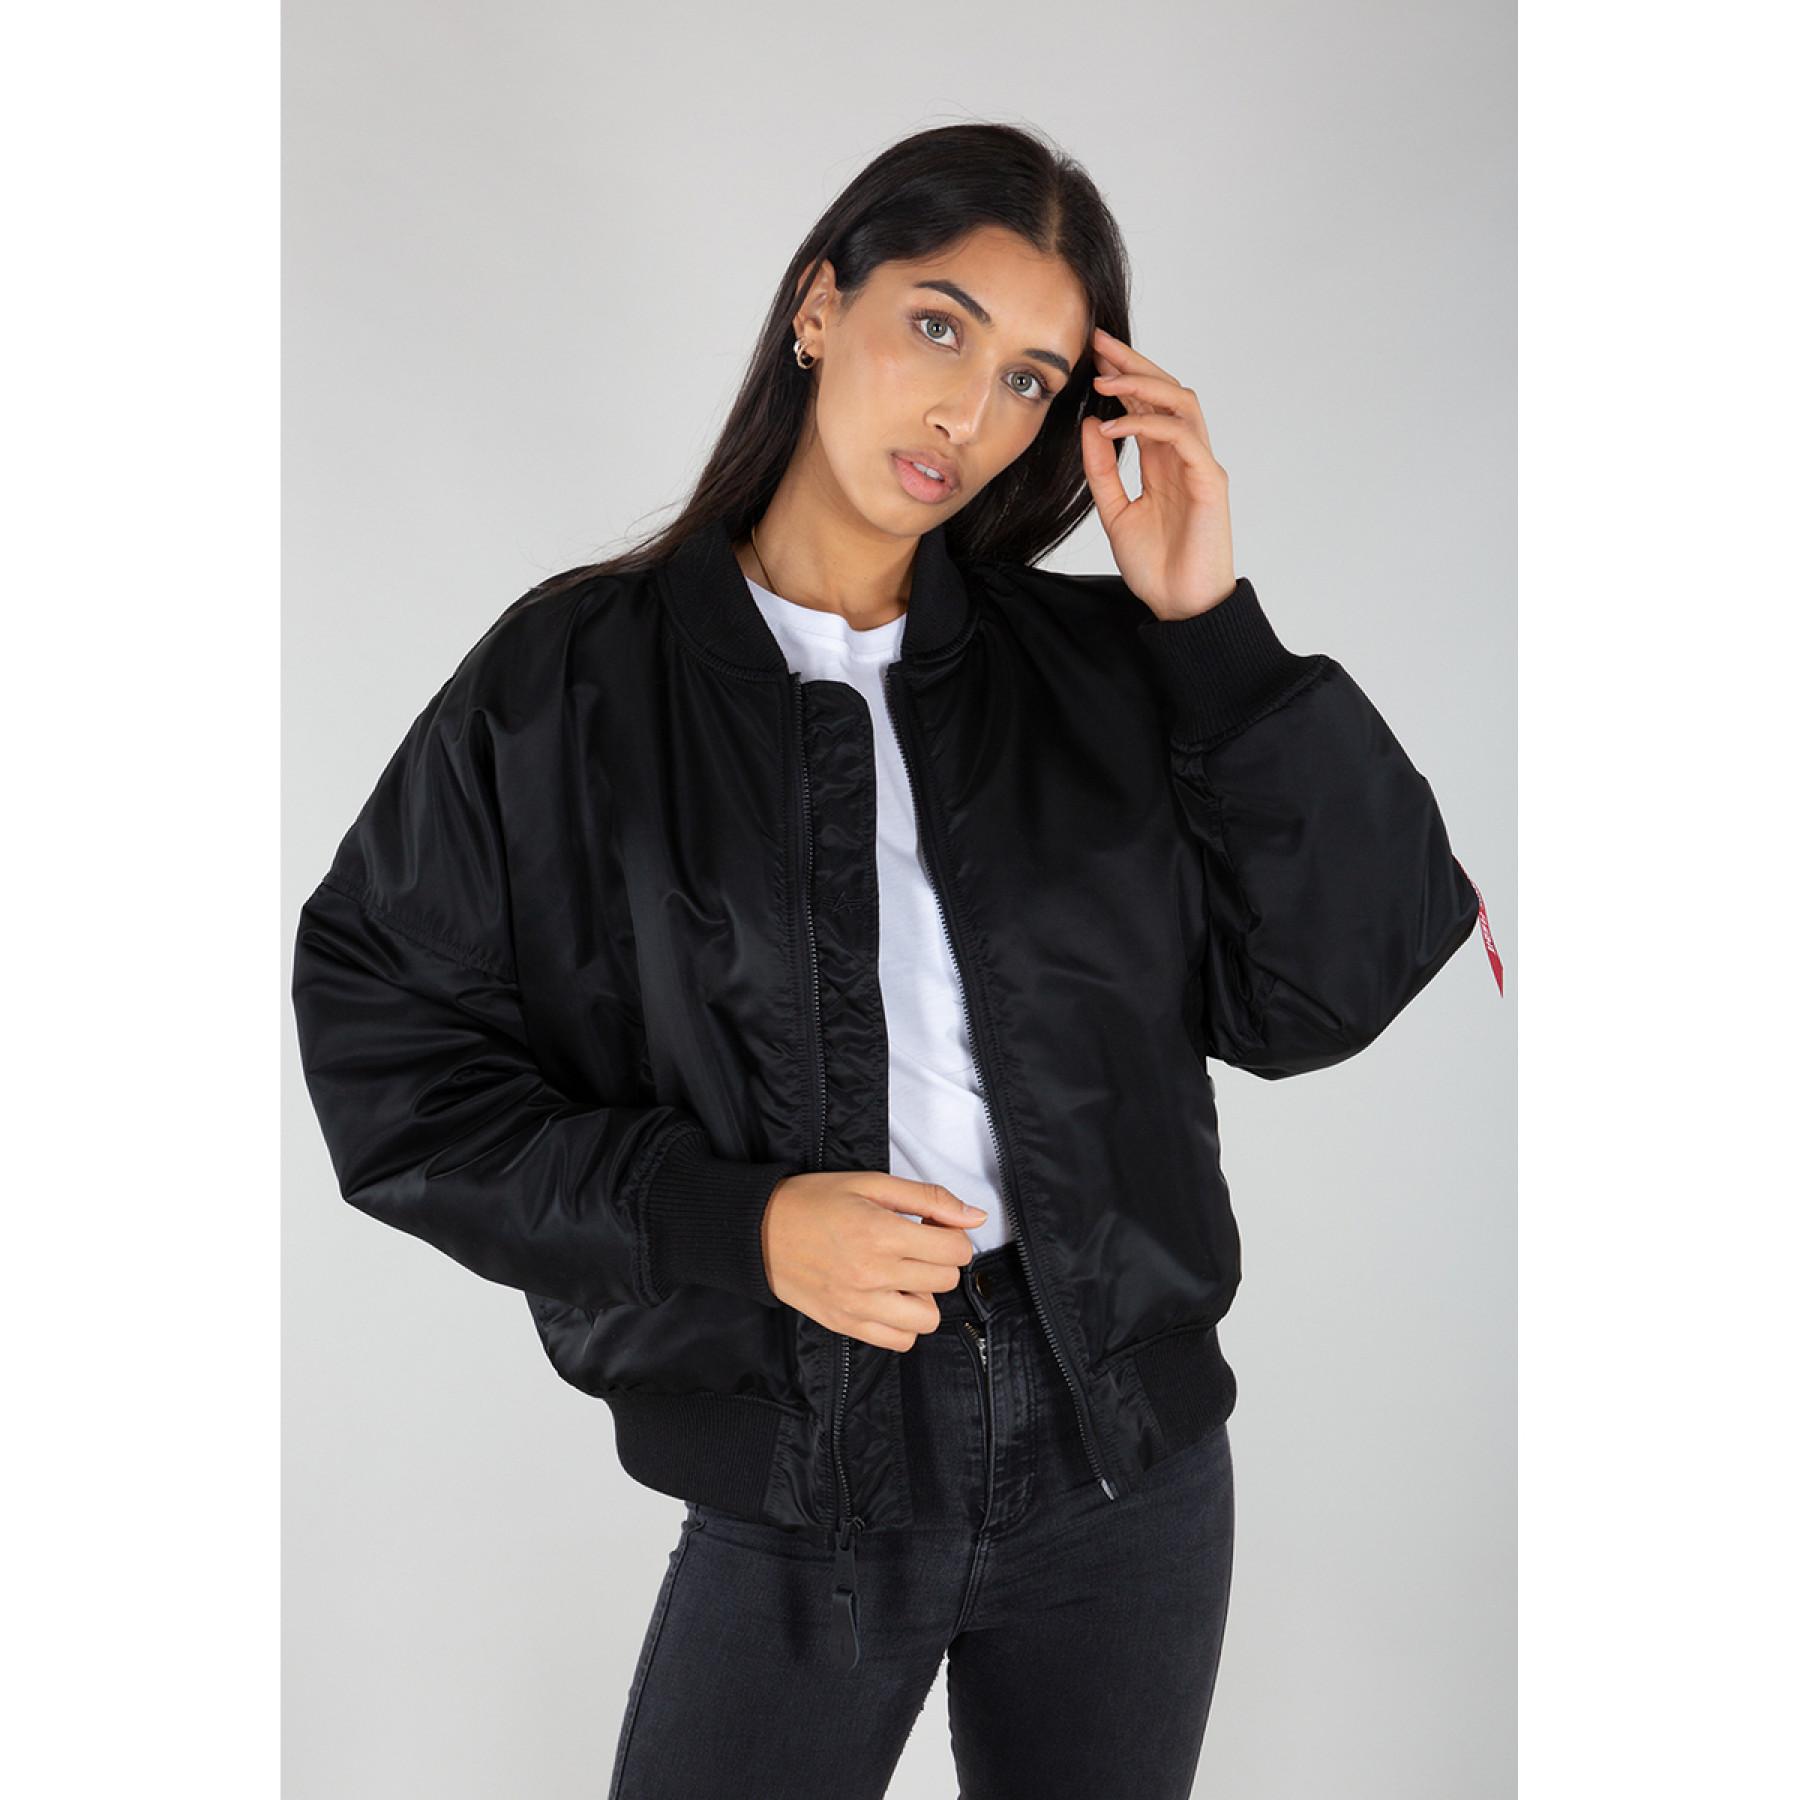 Women's jacket Alpha Industries MA-1 OS